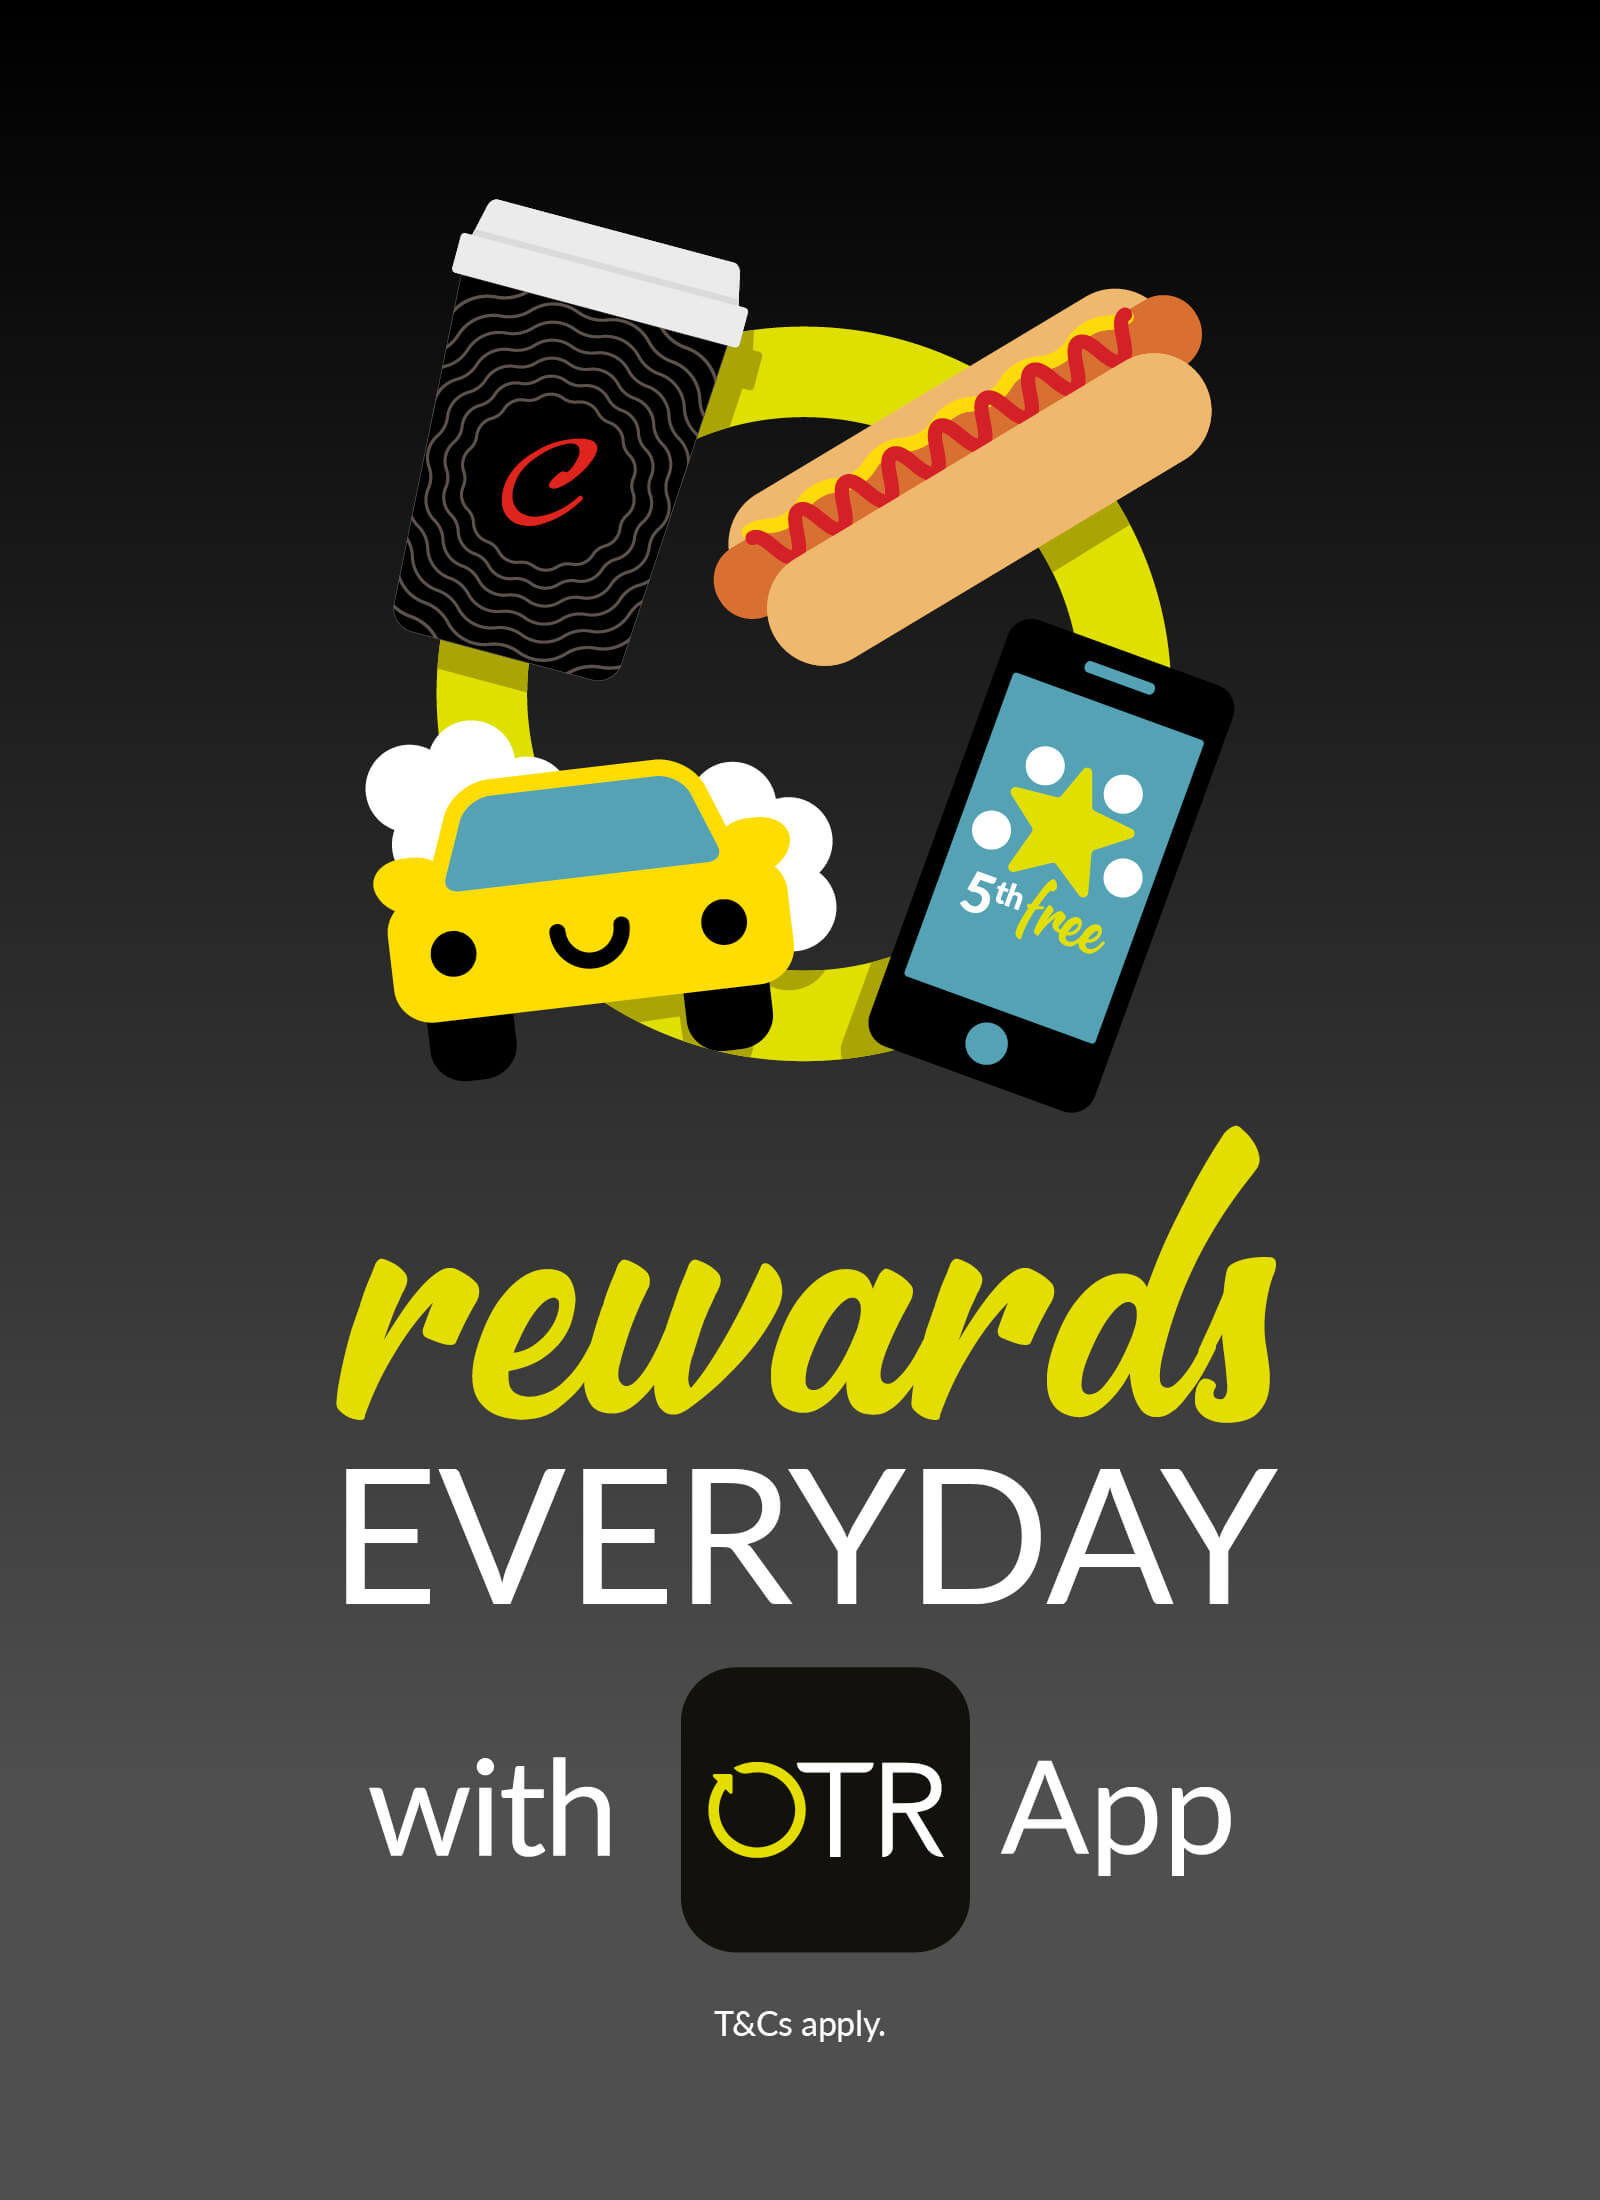 OTR App - Rewards Everyday